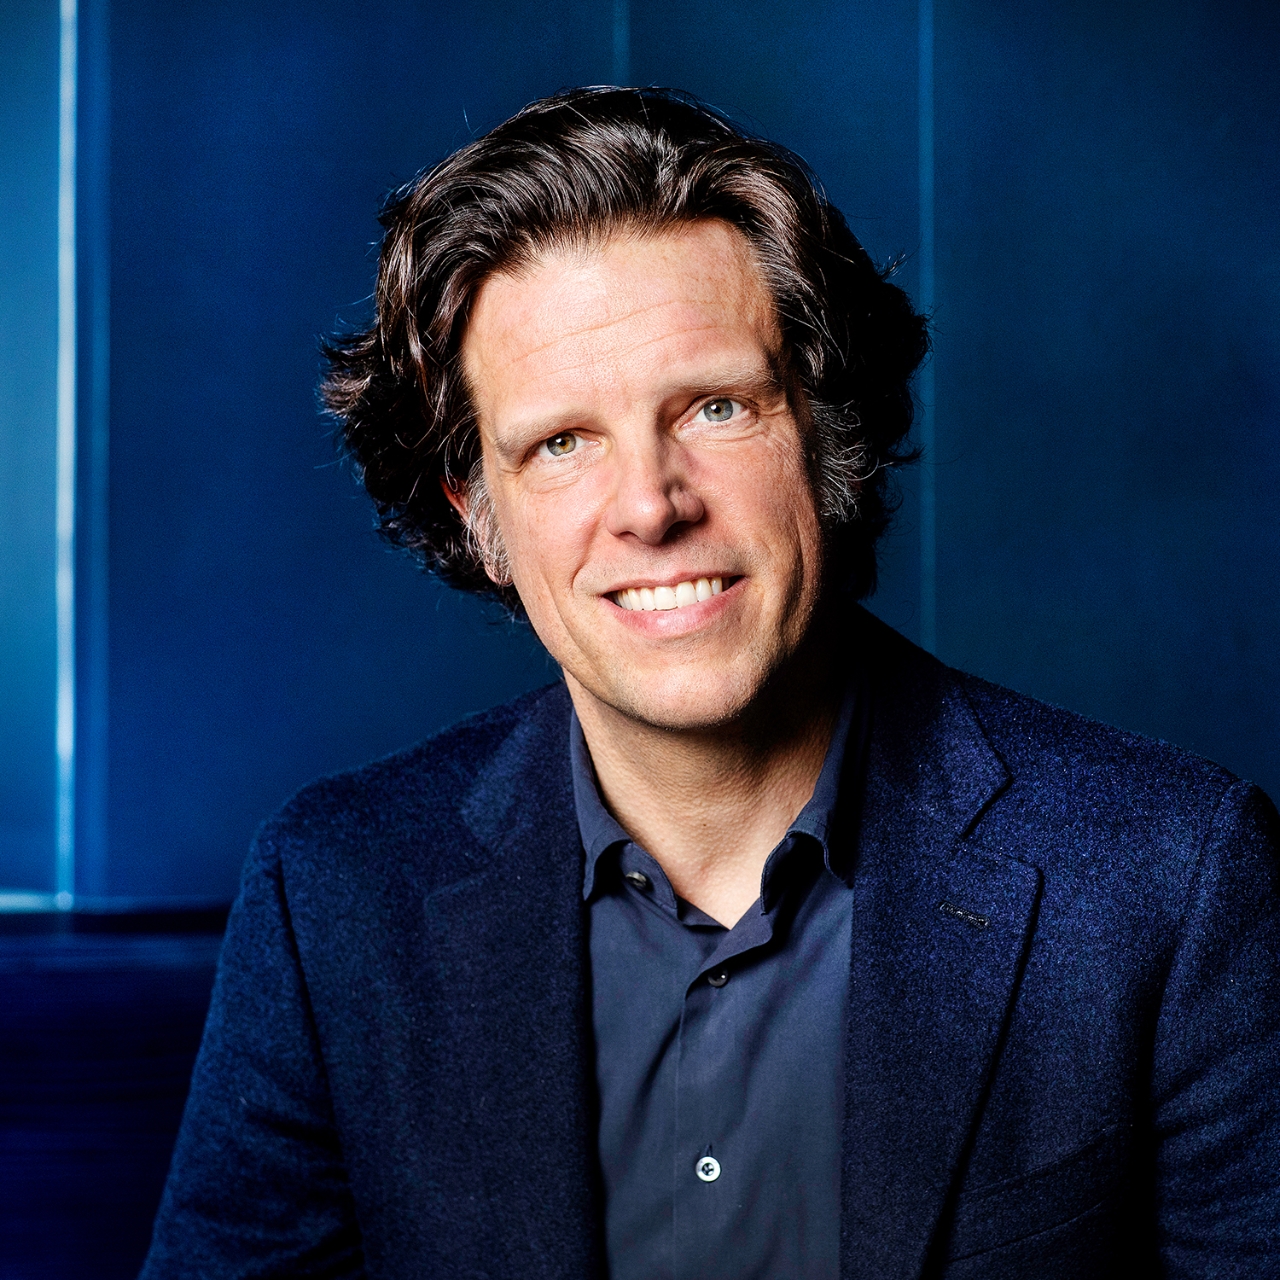 CEO Florian Haller